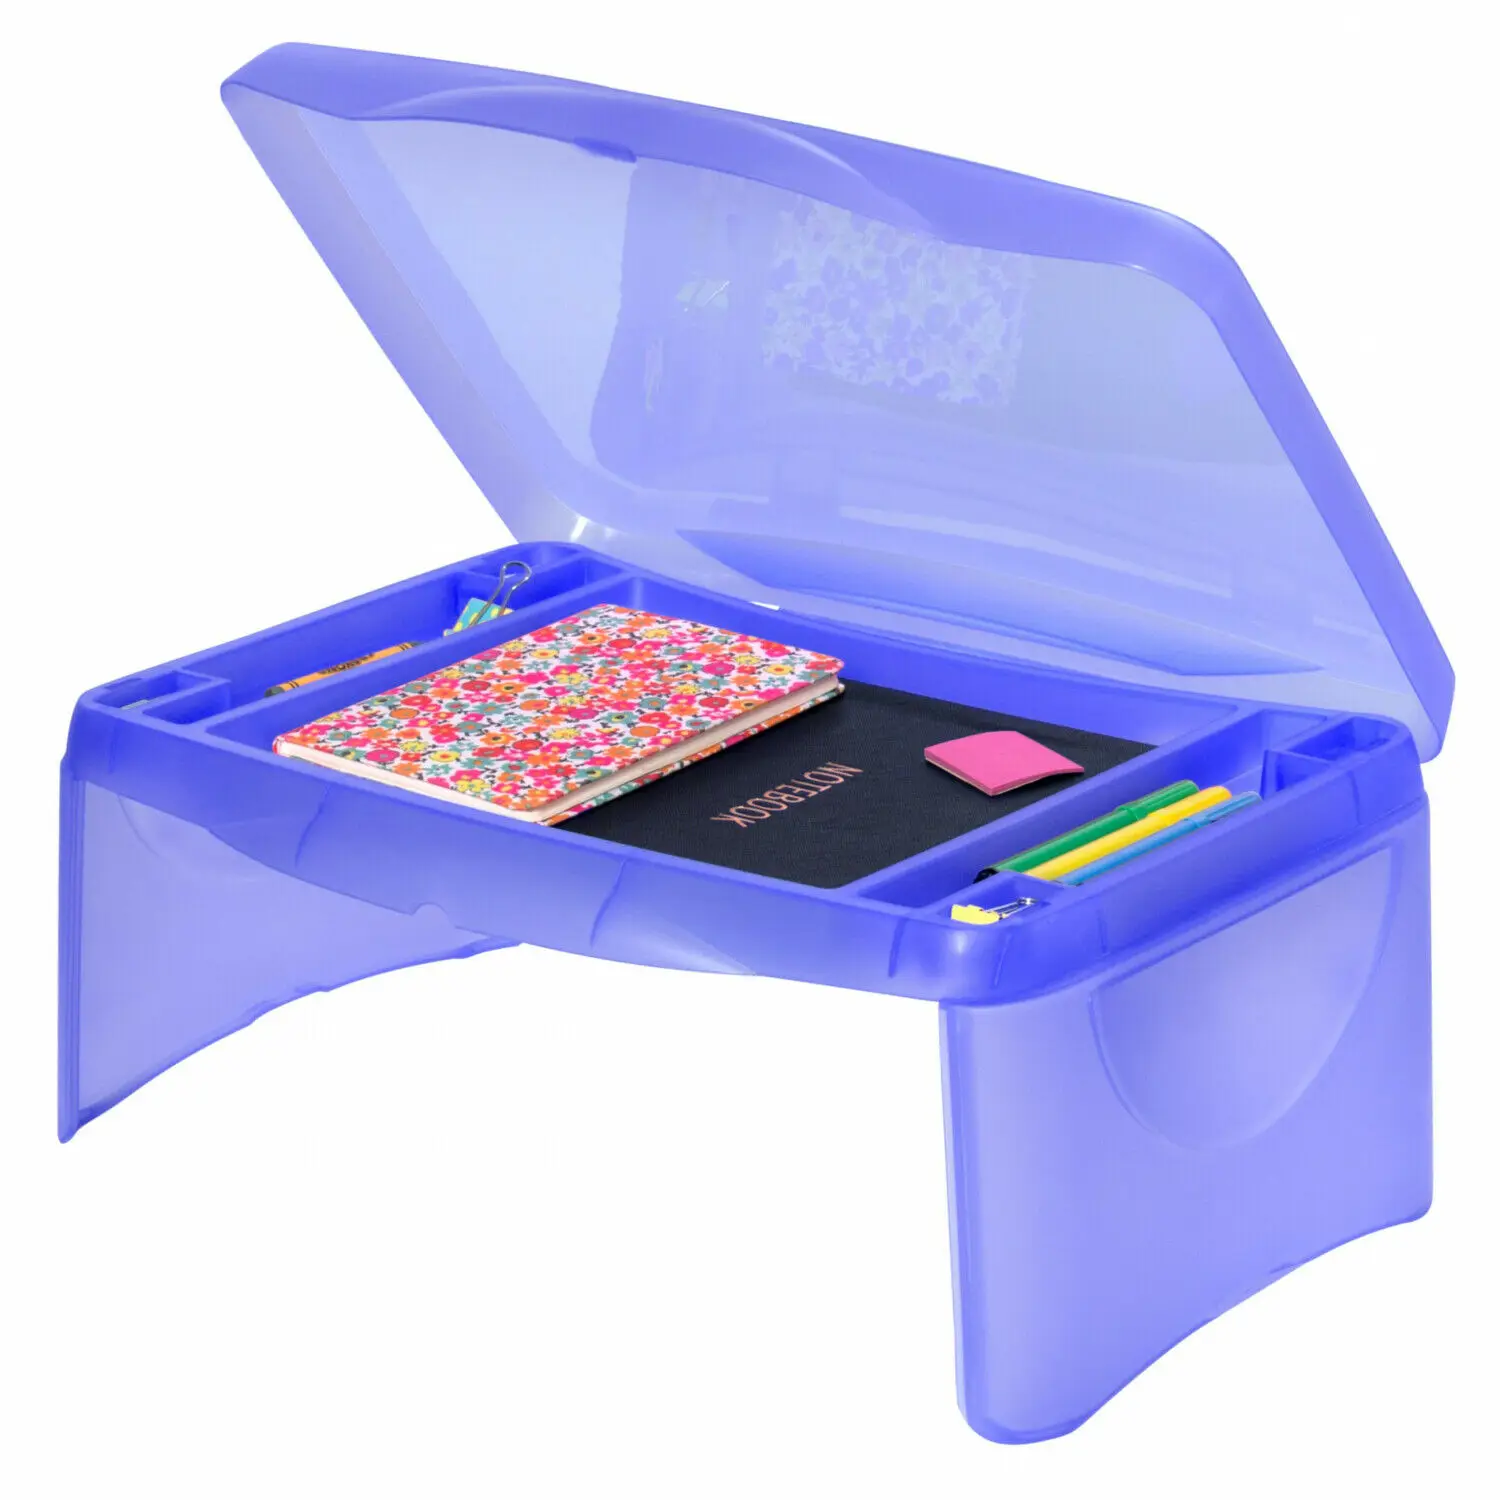 
Durable Lightweight Portable Kids Folding Lap desk with storage 